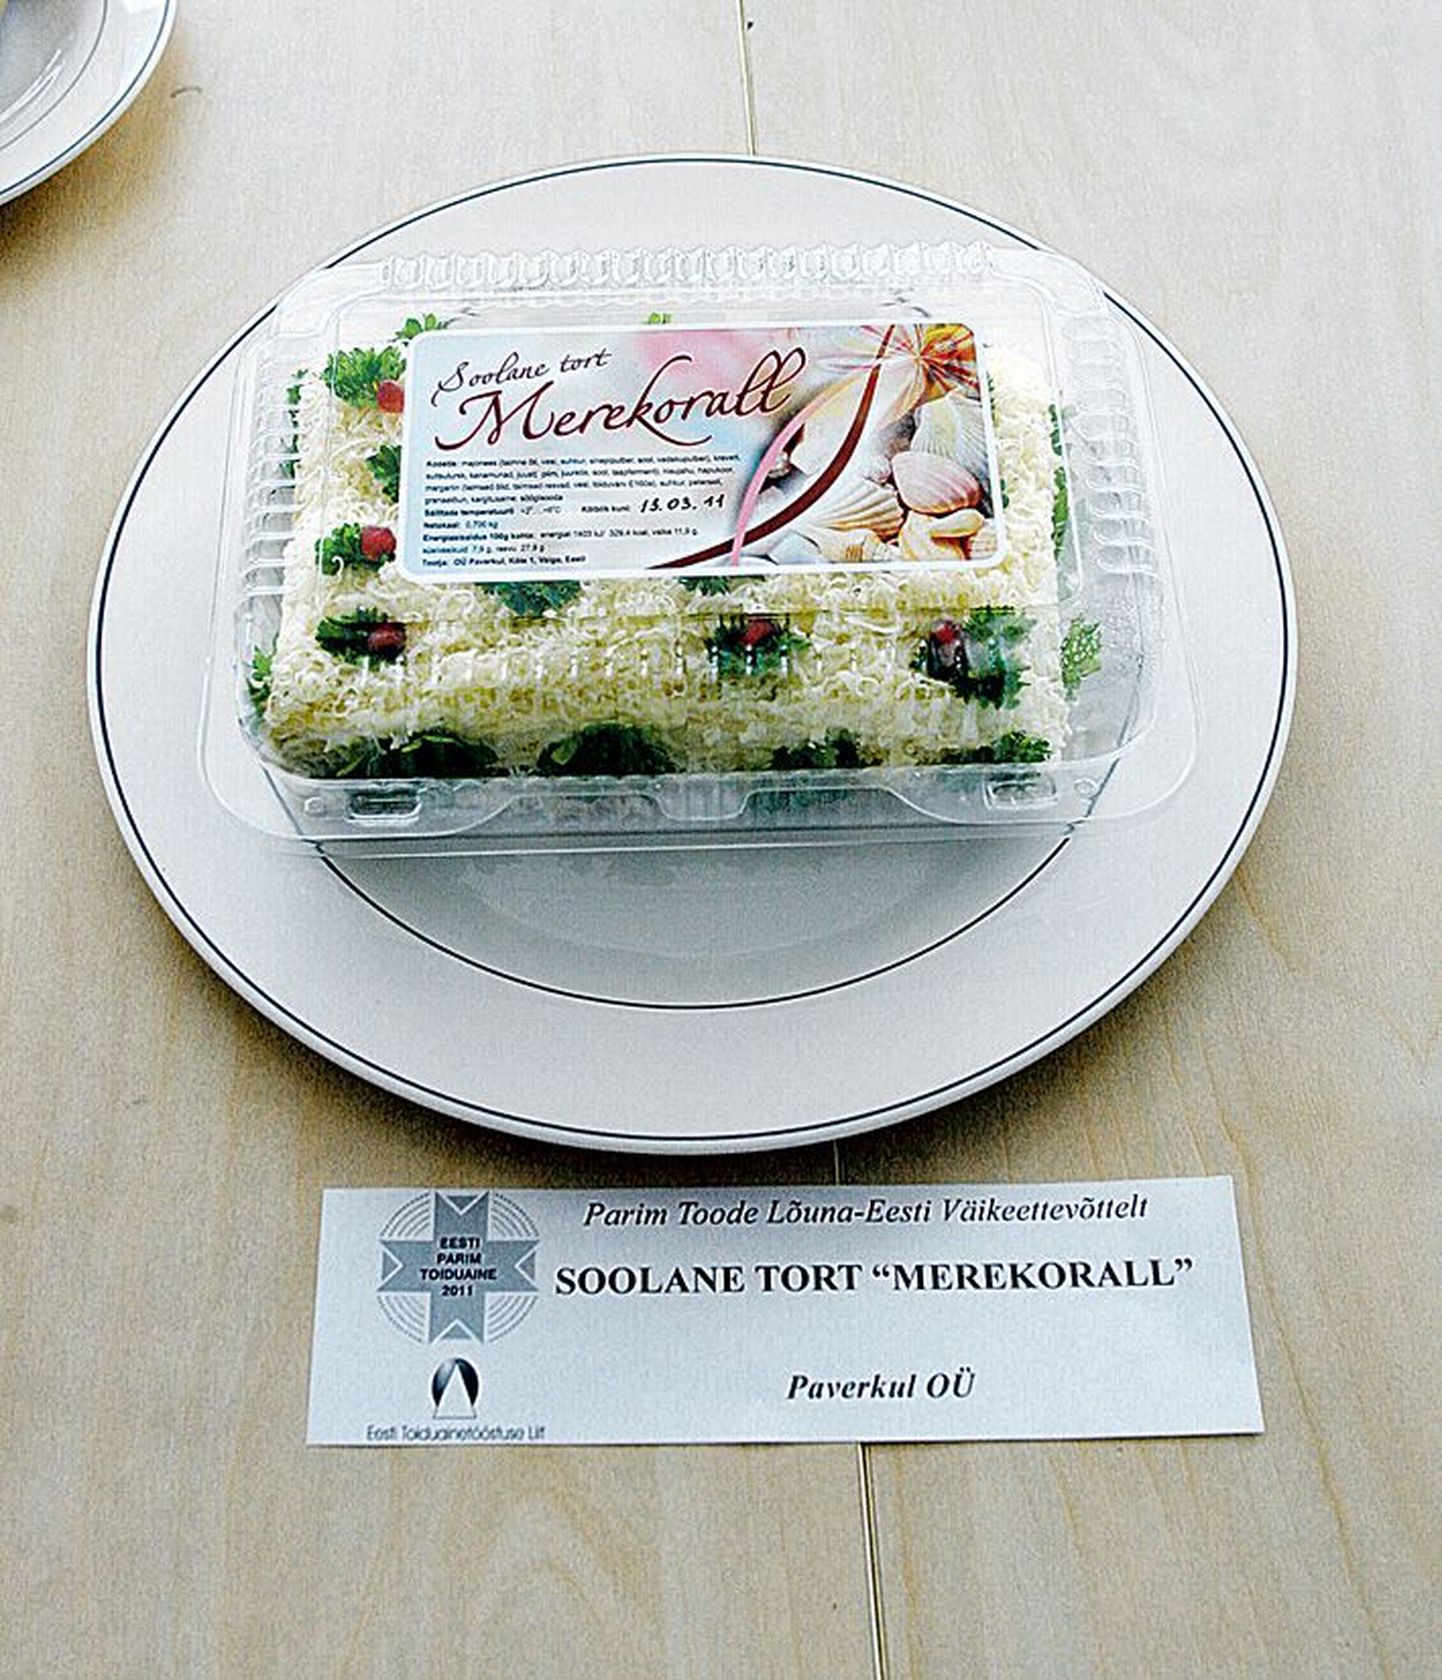 Valga firma Paverkul soolane tort Merekorall.